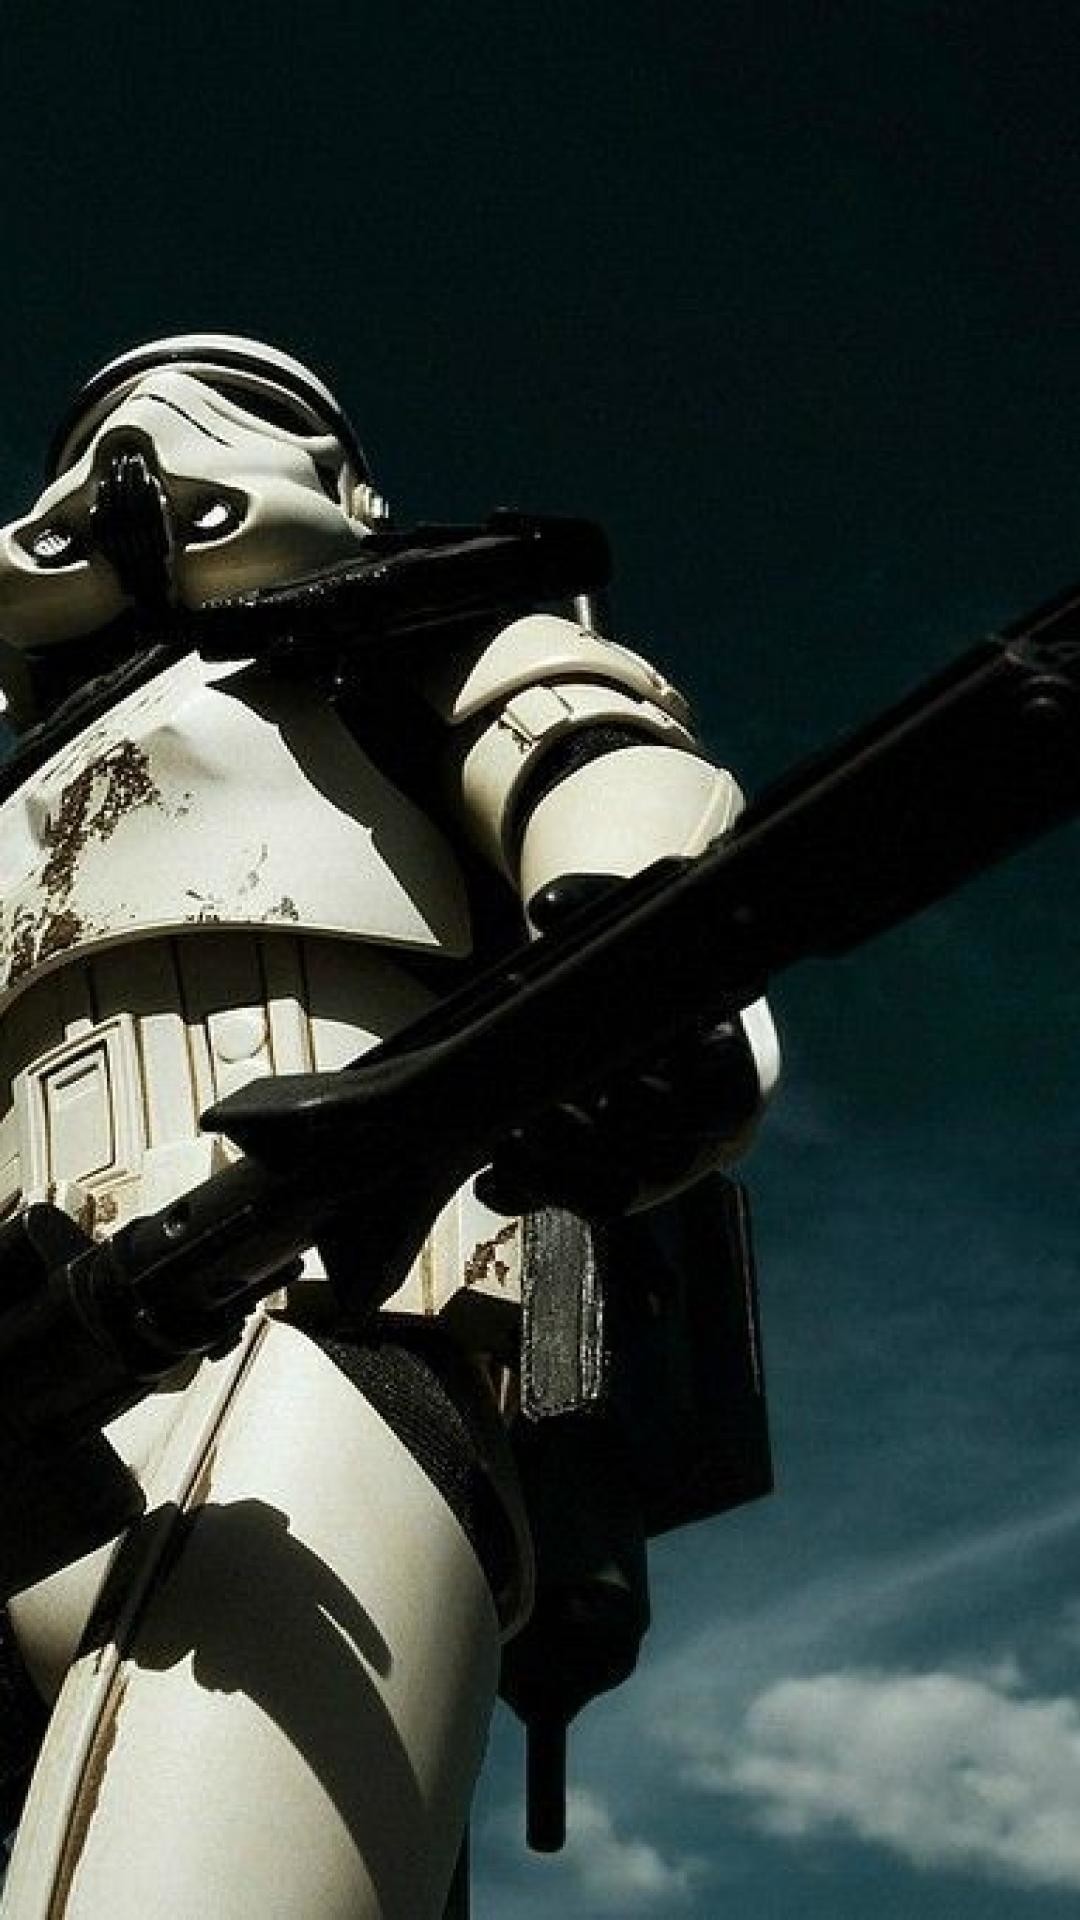 1080x1920 Star wars stormtroopers galactic empire storm trooper wallpaper 